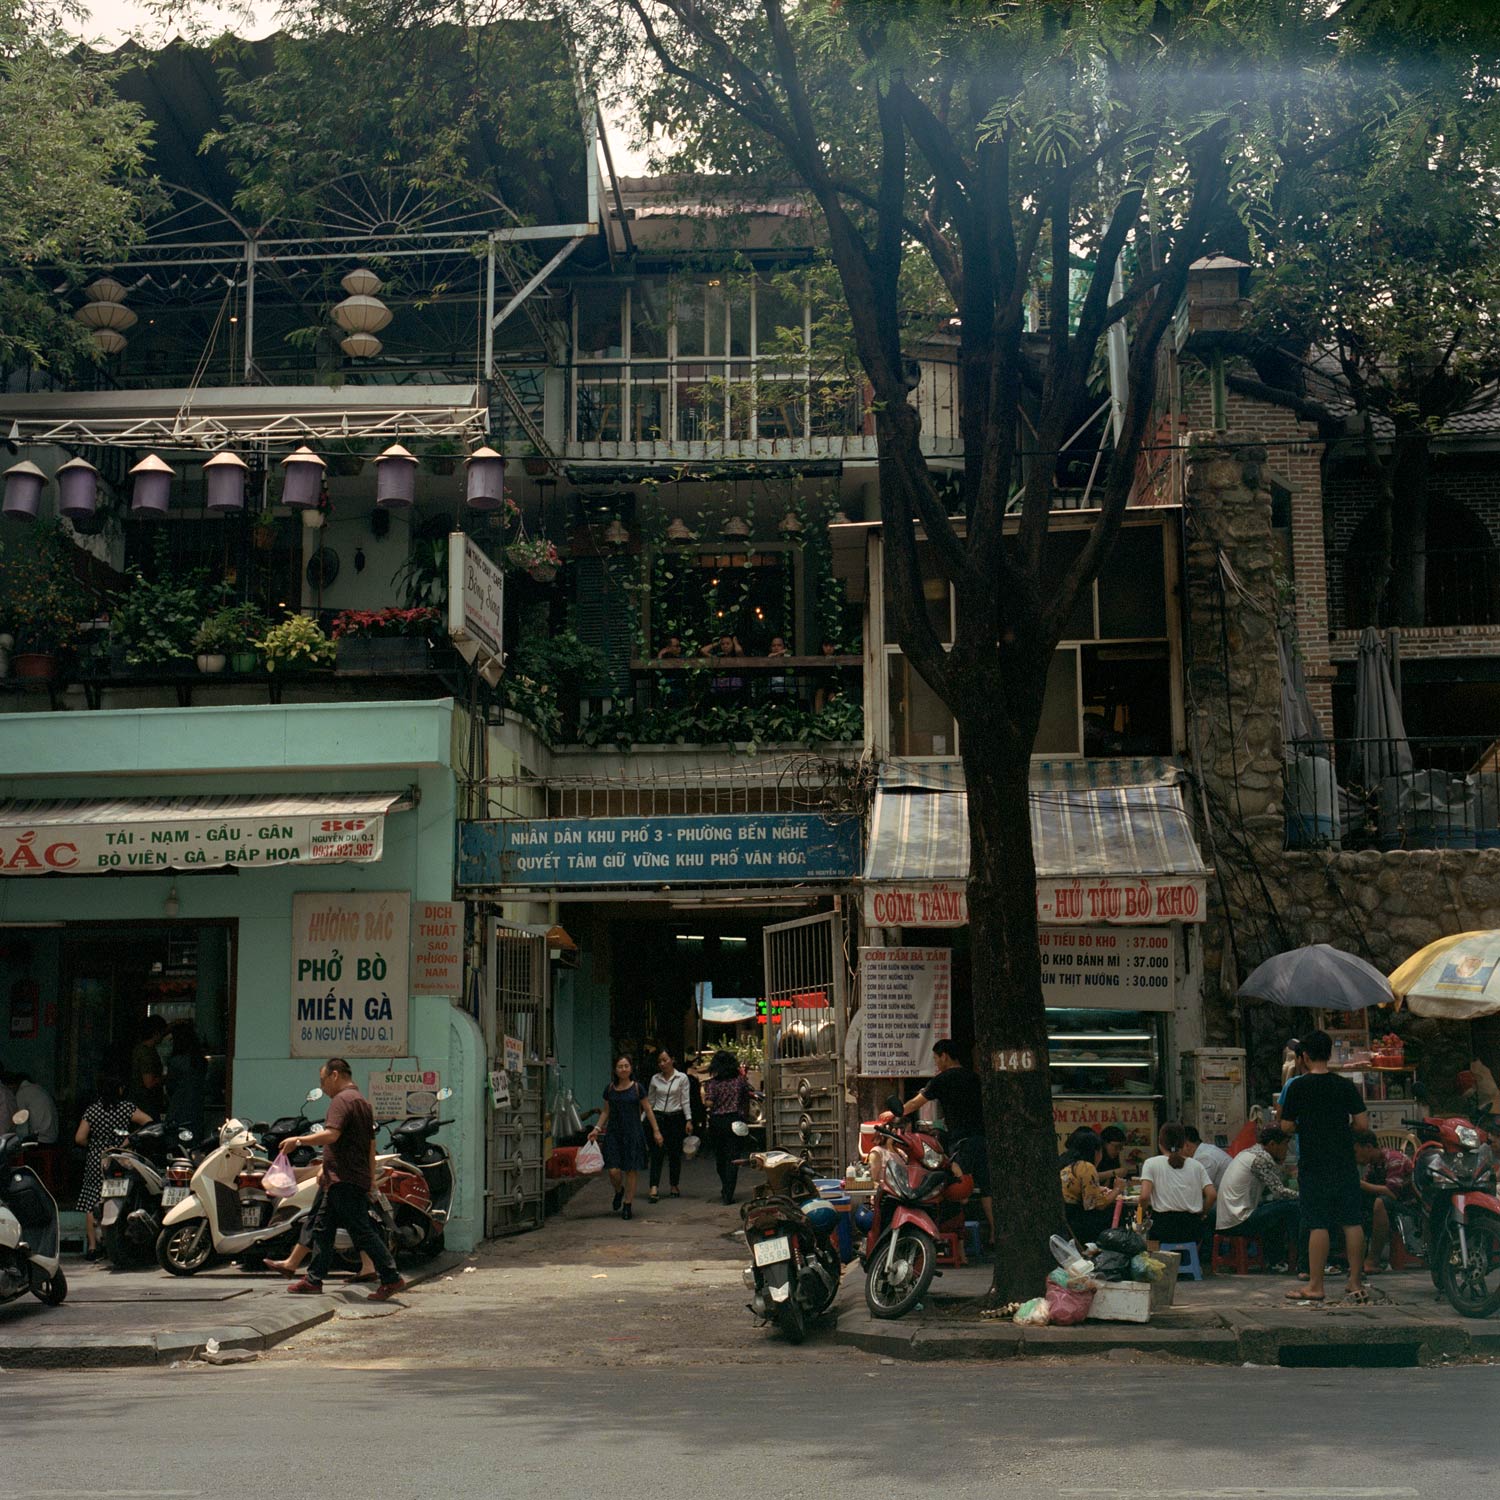 THe locals, street scene of Hanoi, Vietnam.